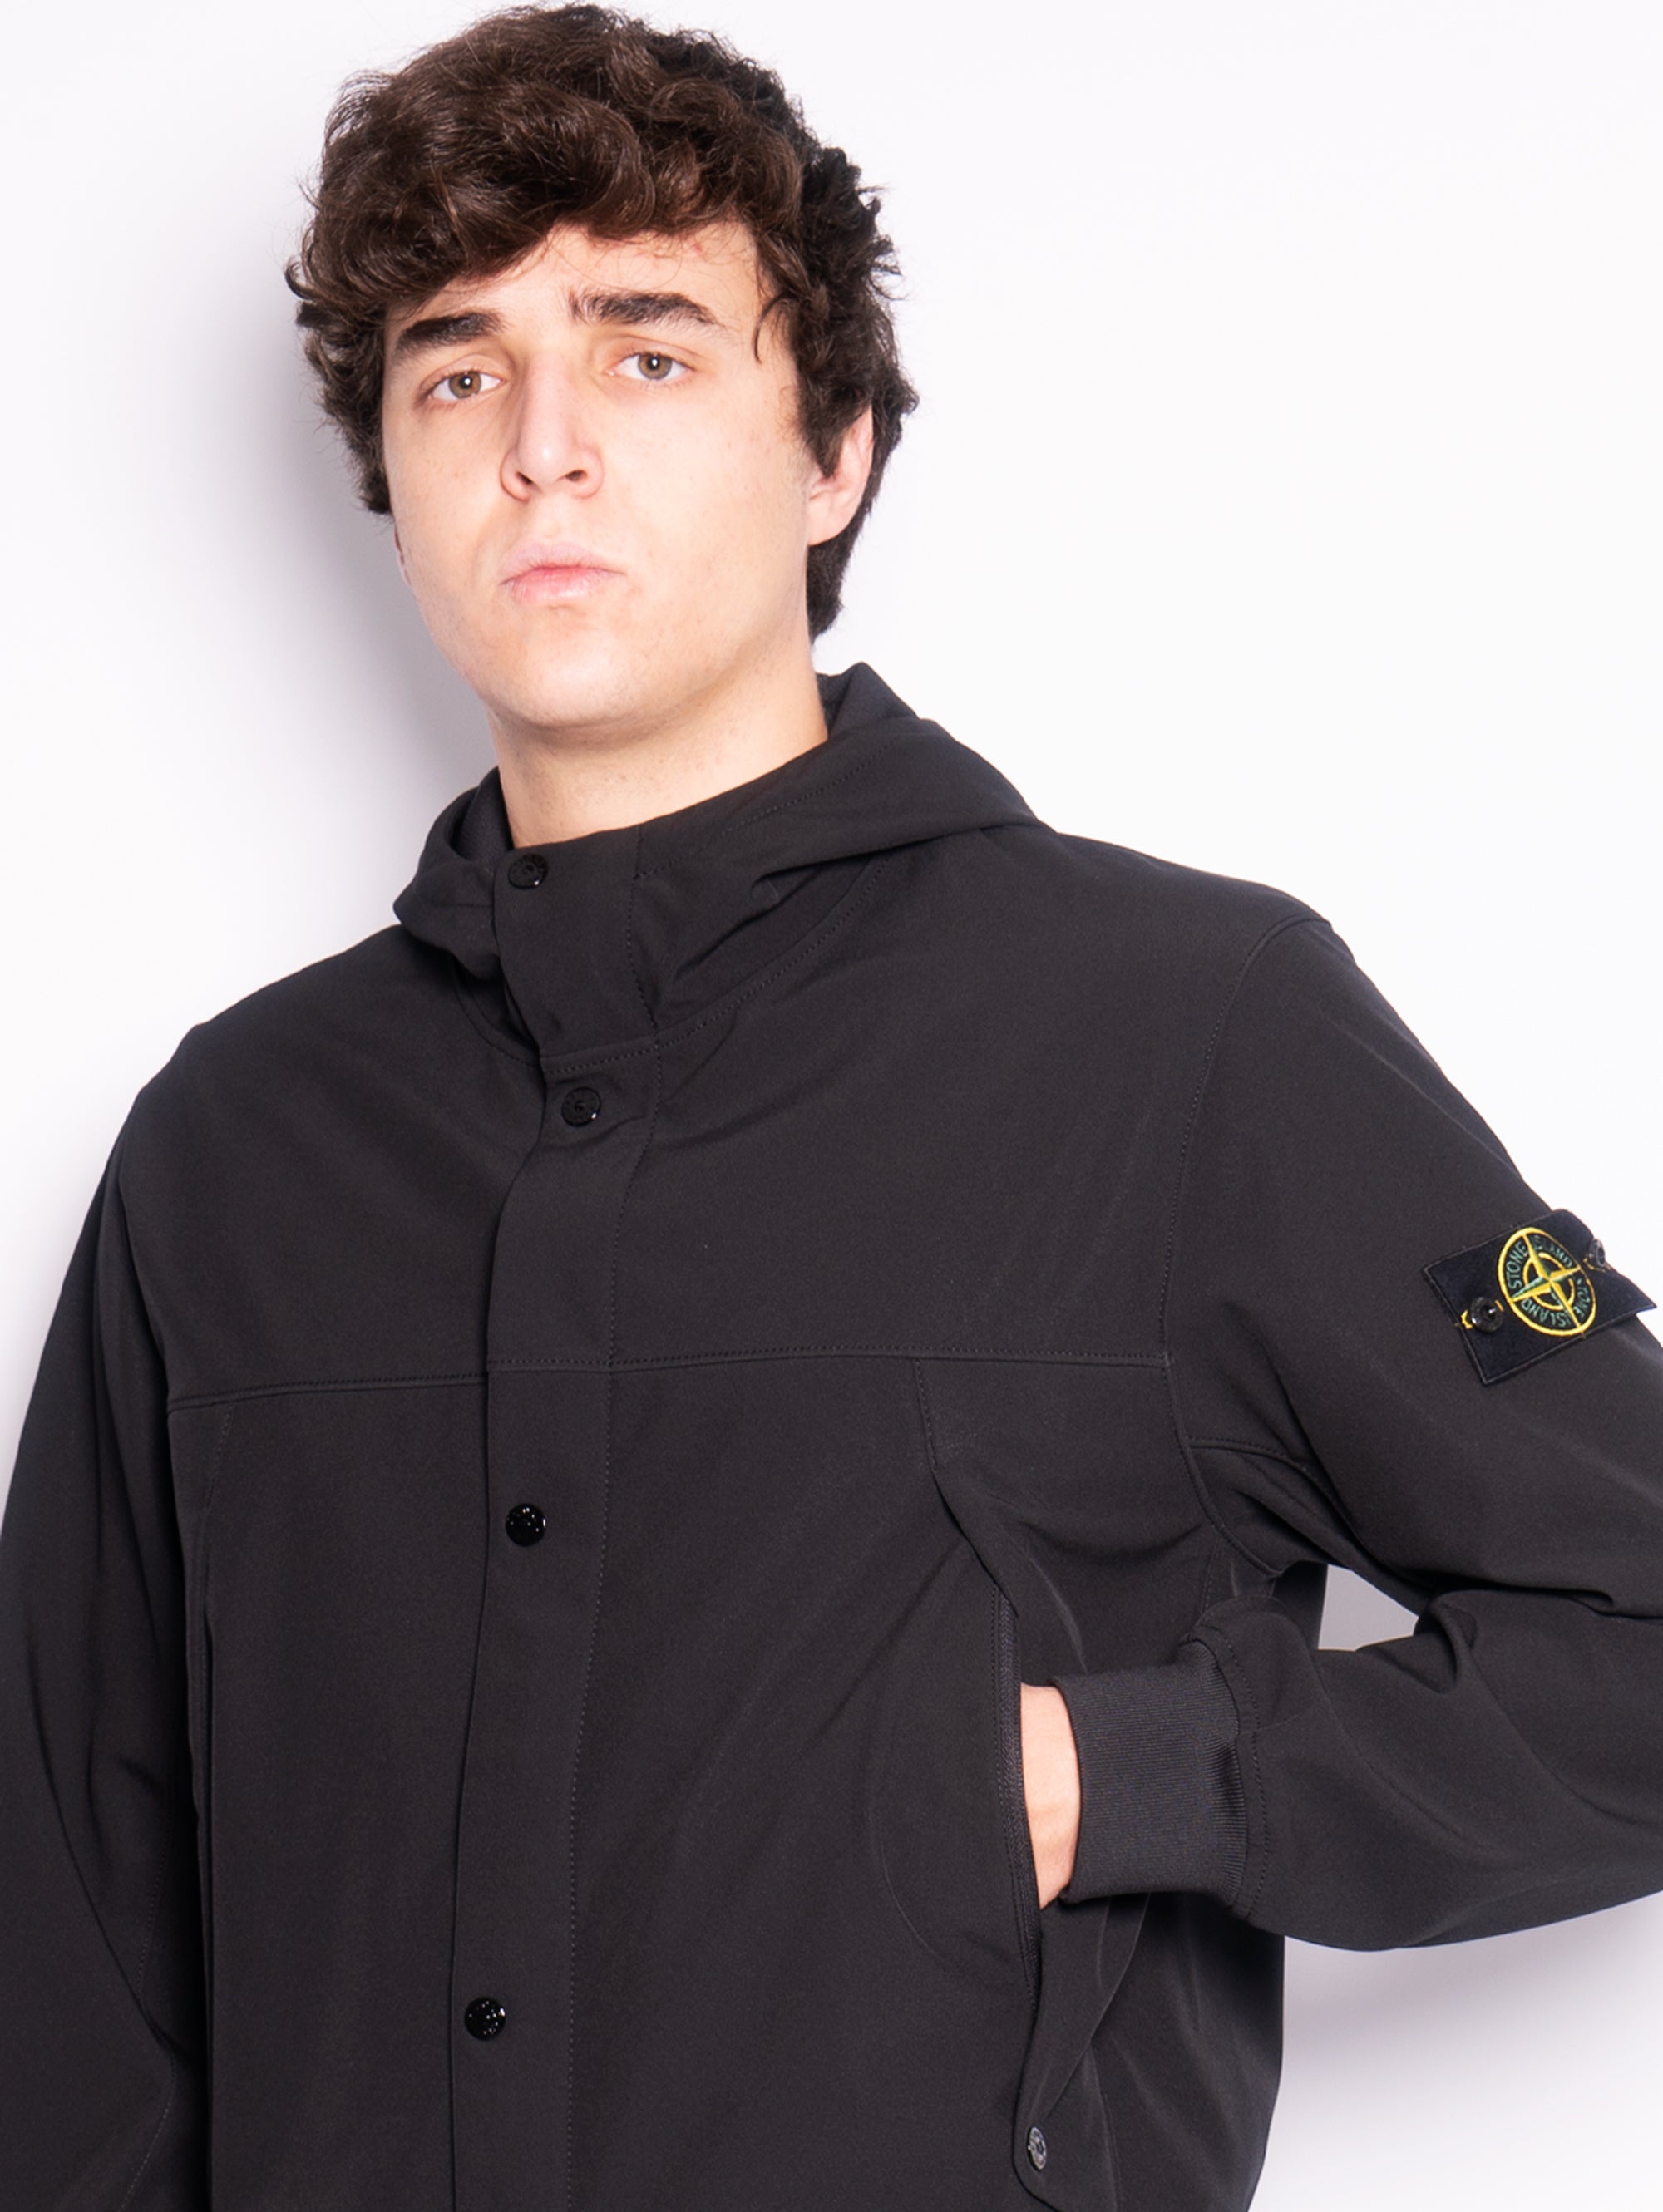 Jacke mit Kapuze aus schwarzem Performance-Material